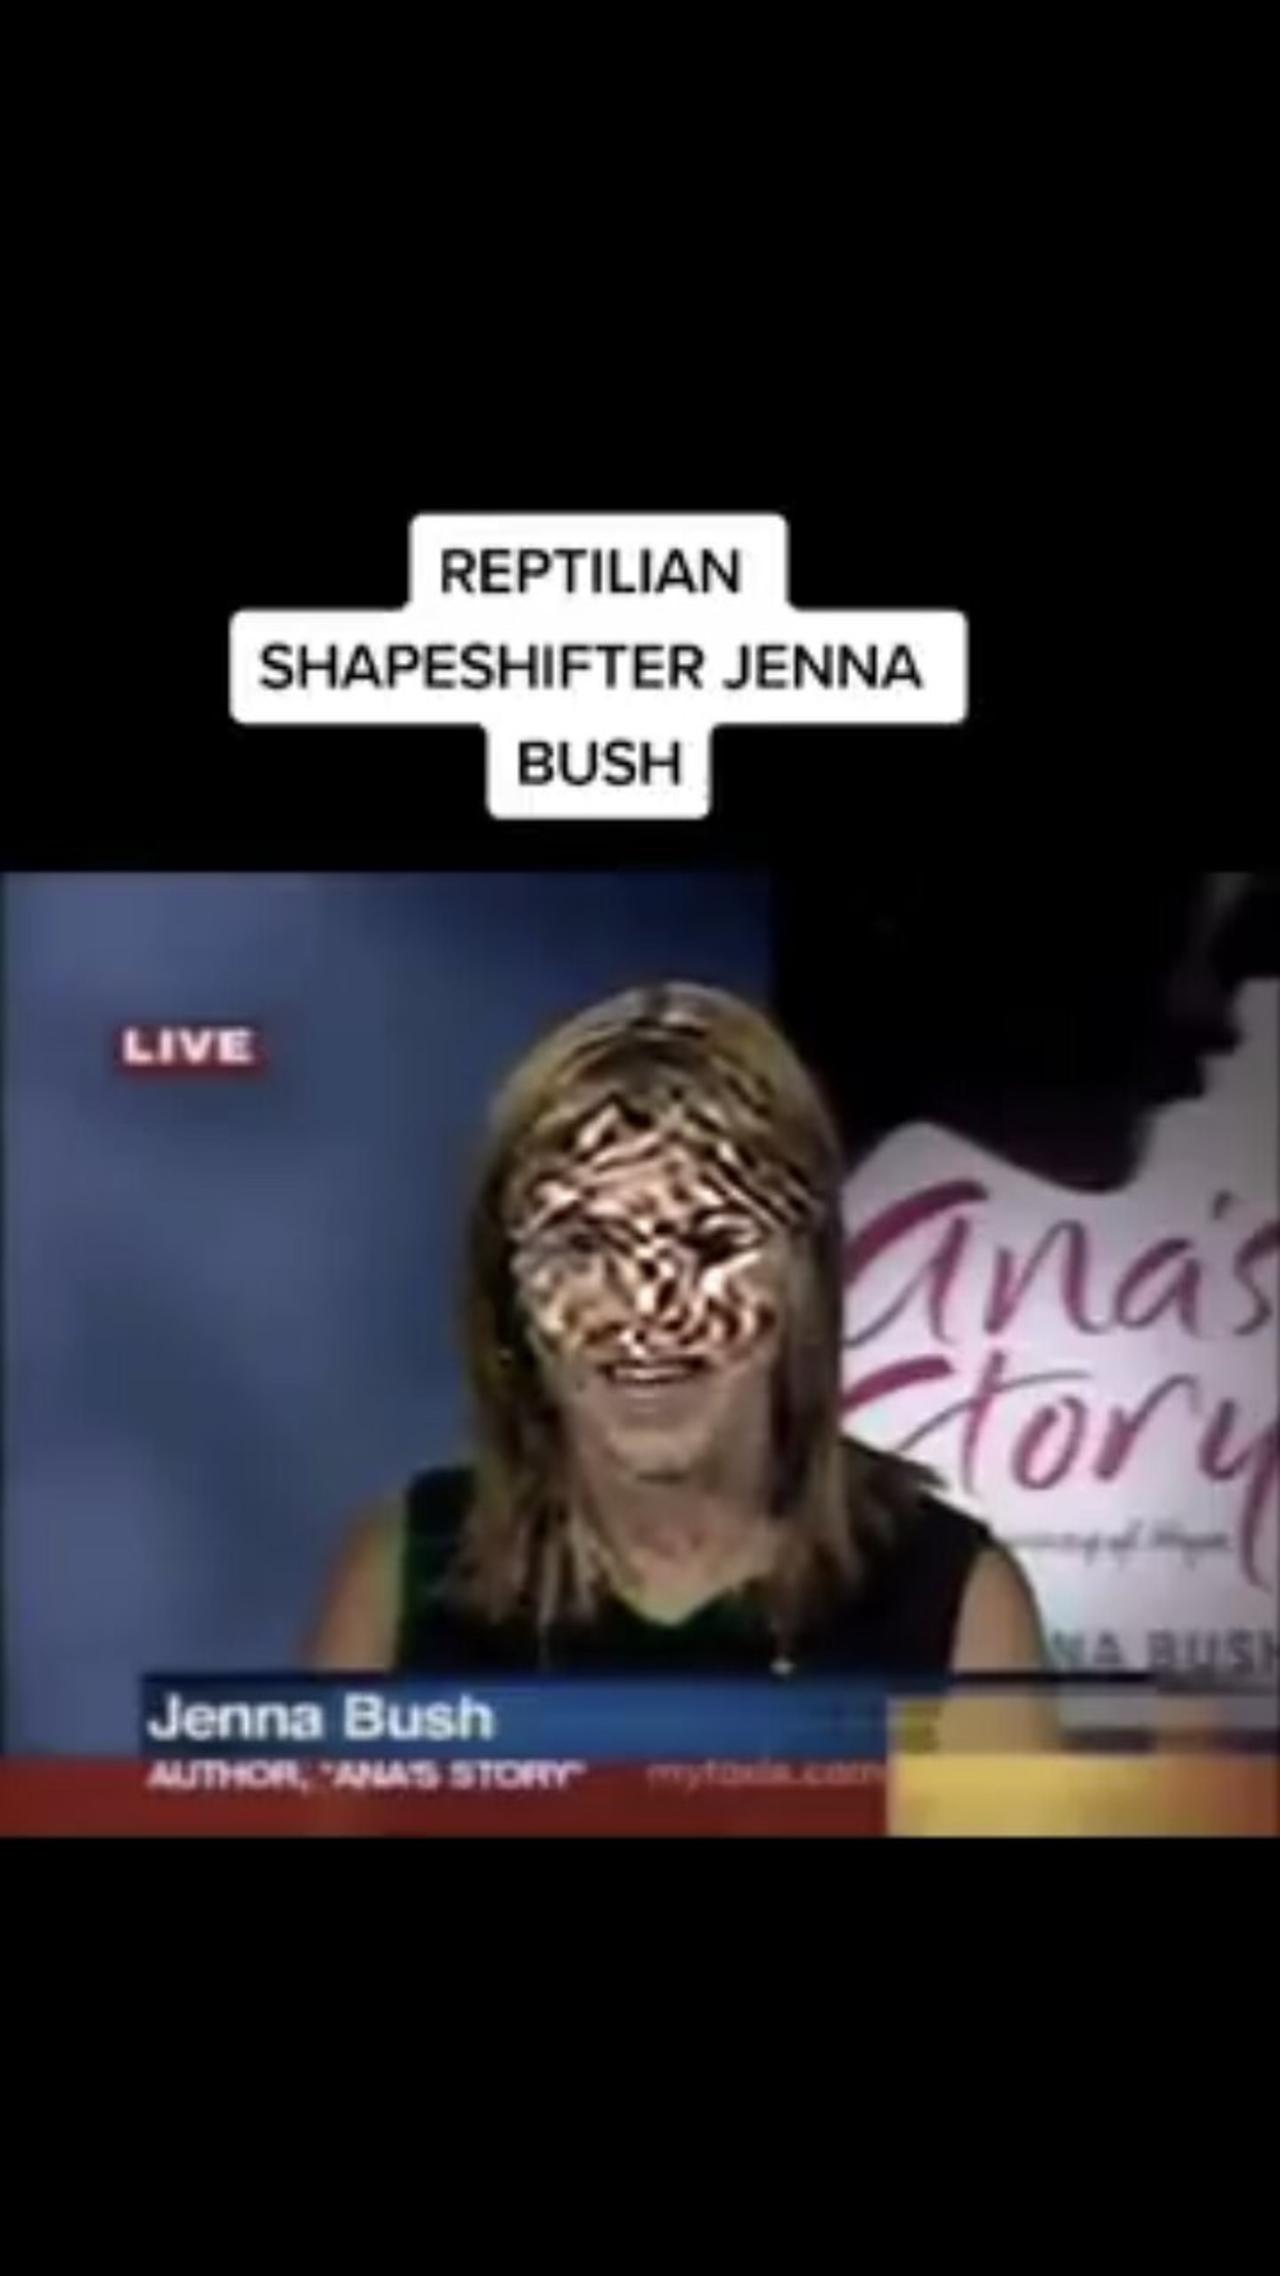 Jenna Bush is a reptilian shapeshifter